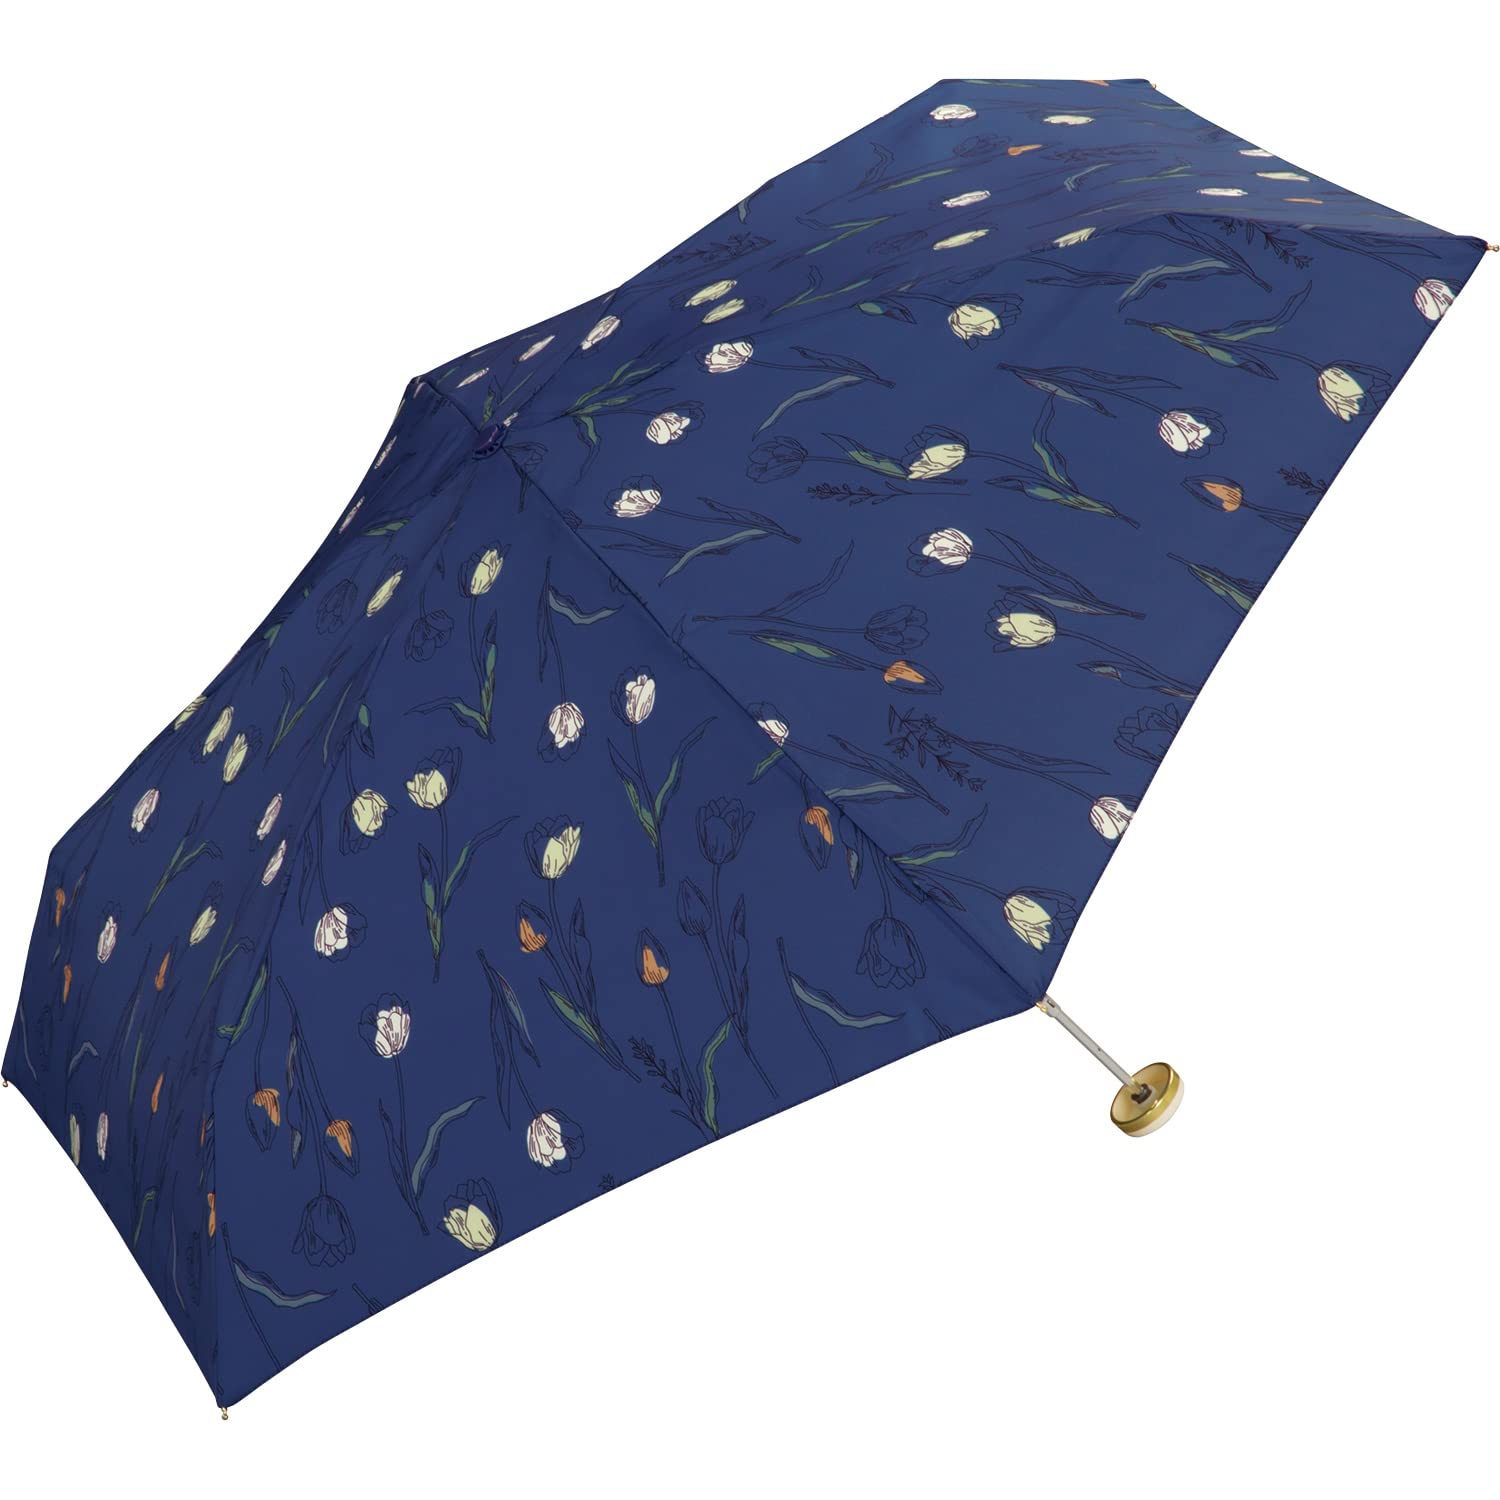 202Wpc. 雨傘 ヴィンテージチューリップ ミニ ブルー 折りたたみ傘 50cm レディース 晴雨兼用 花柄 ナチュラル 上品 ポーチタイプ 収納袋